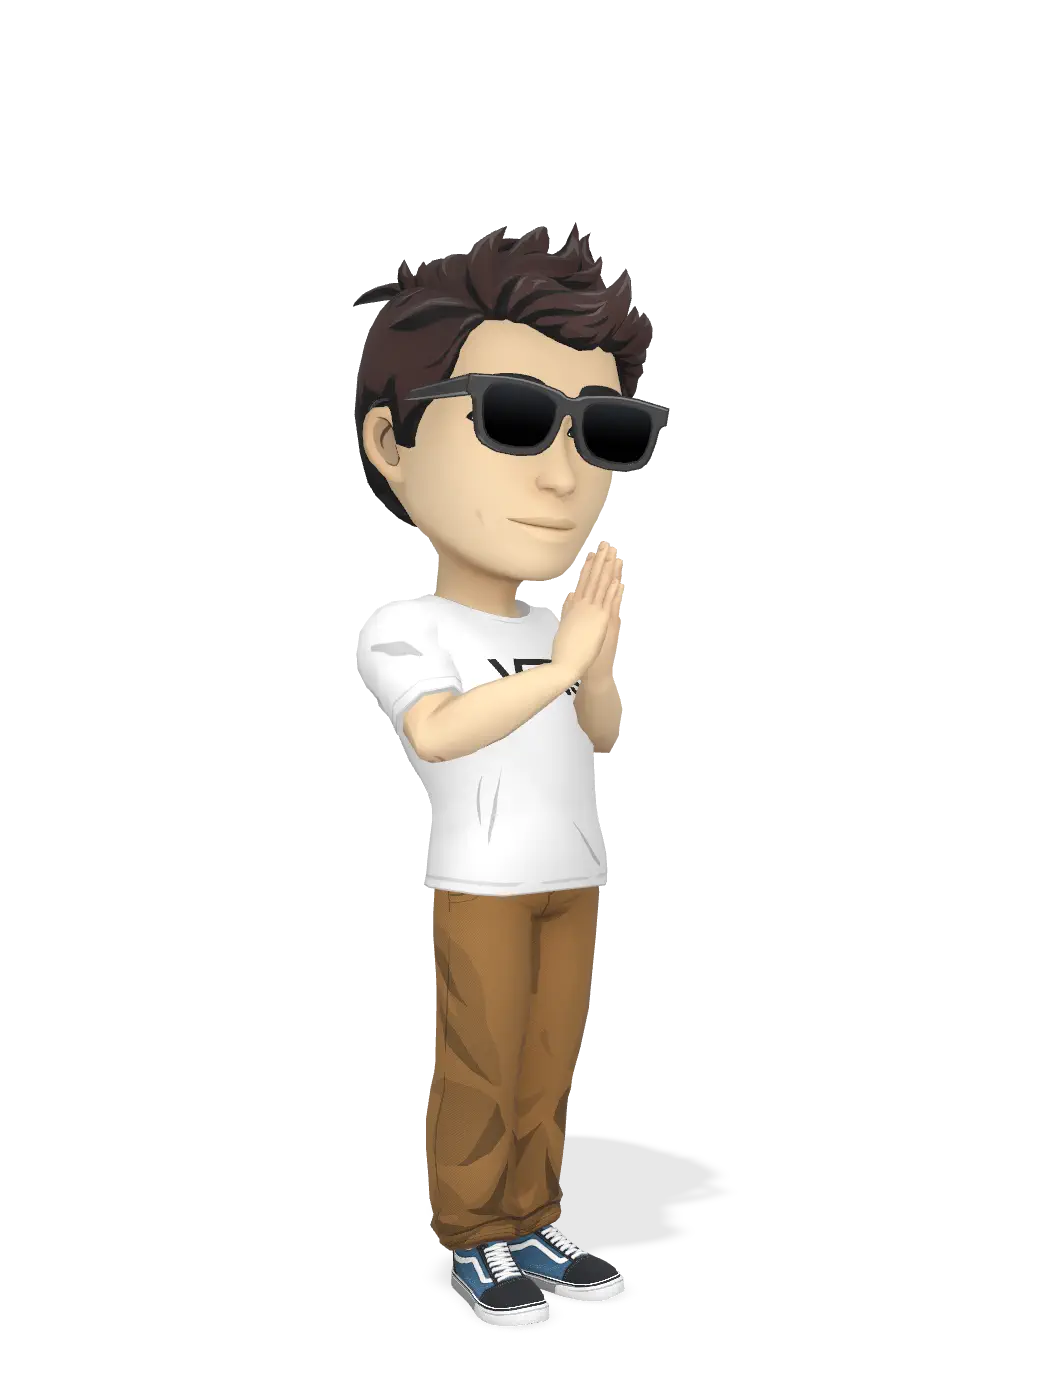 3D Bitmoji for djnyu avatar